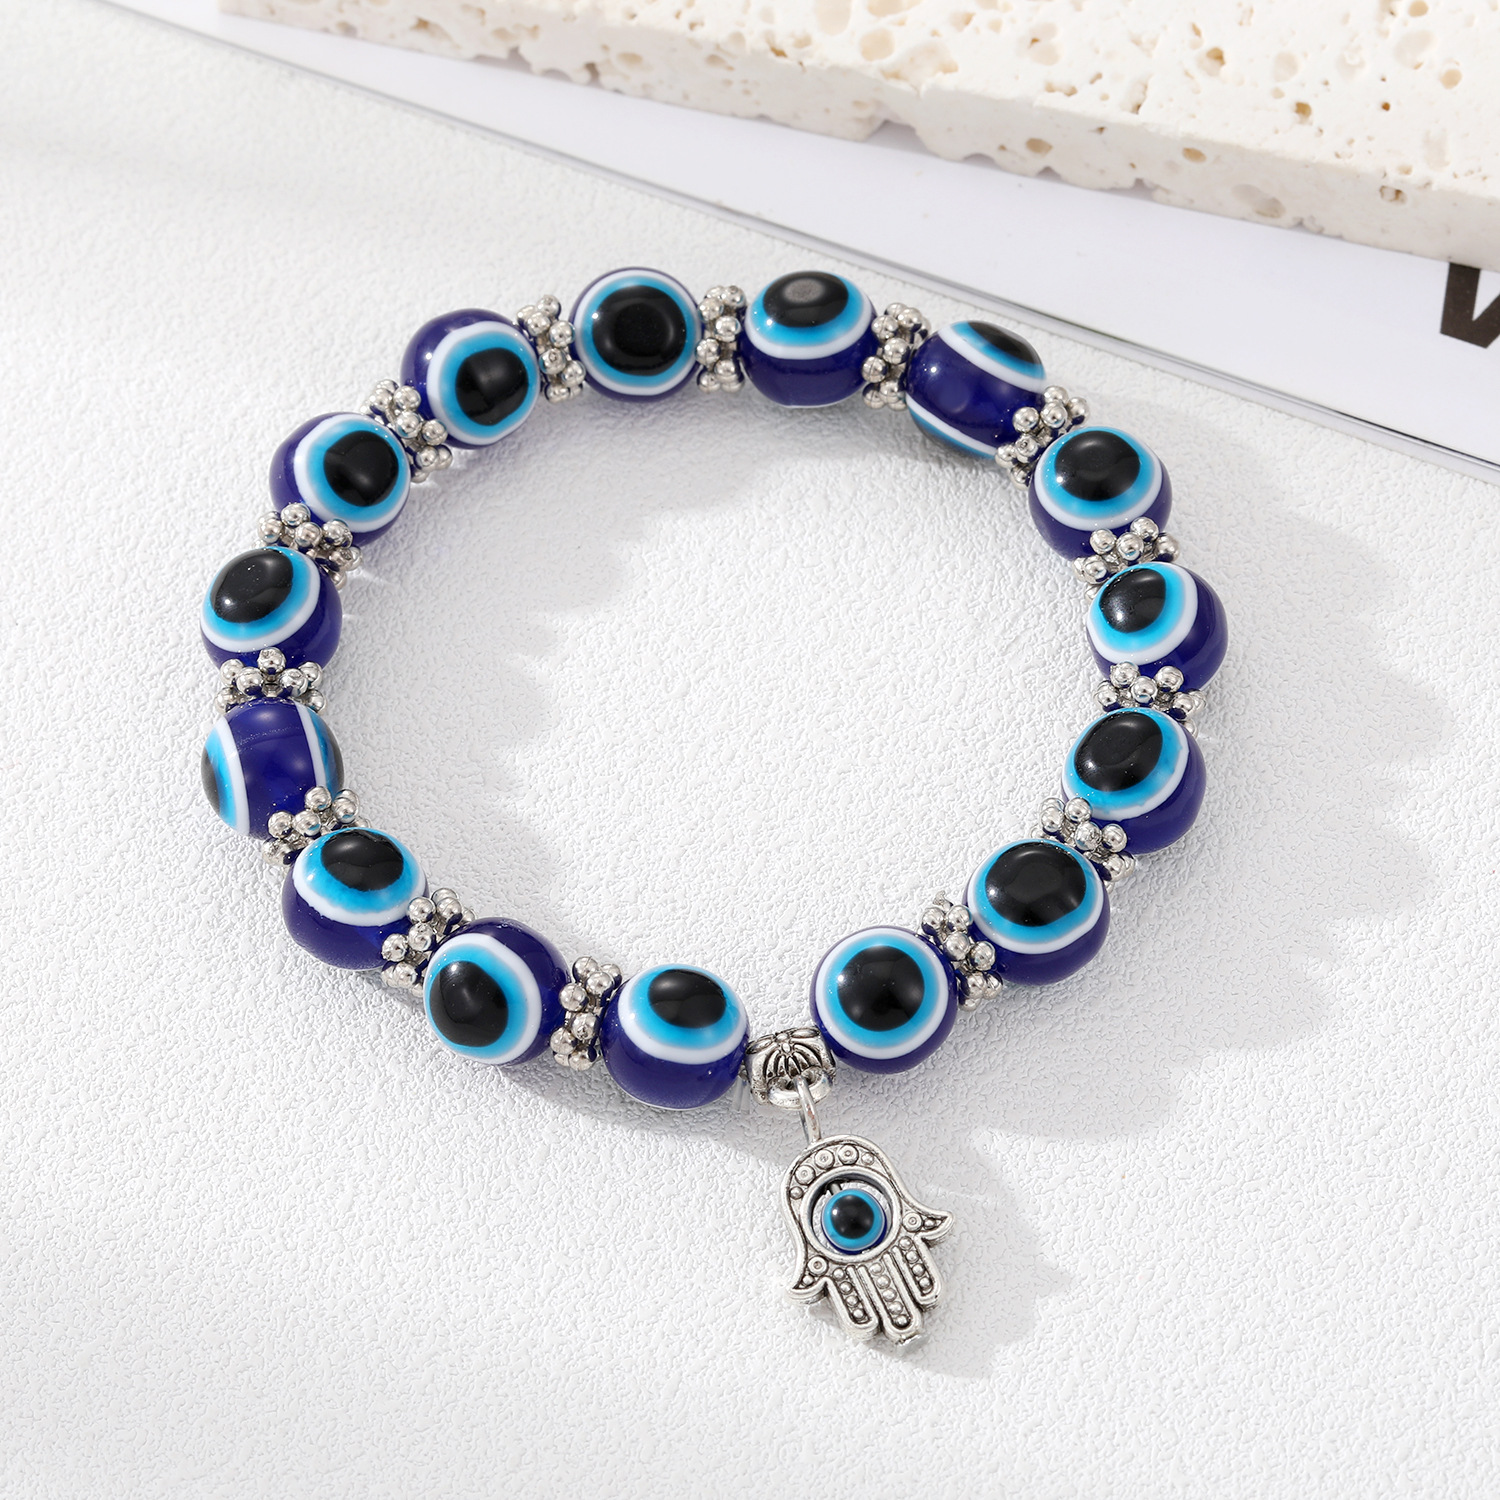 Blue palm bracelet with large beads